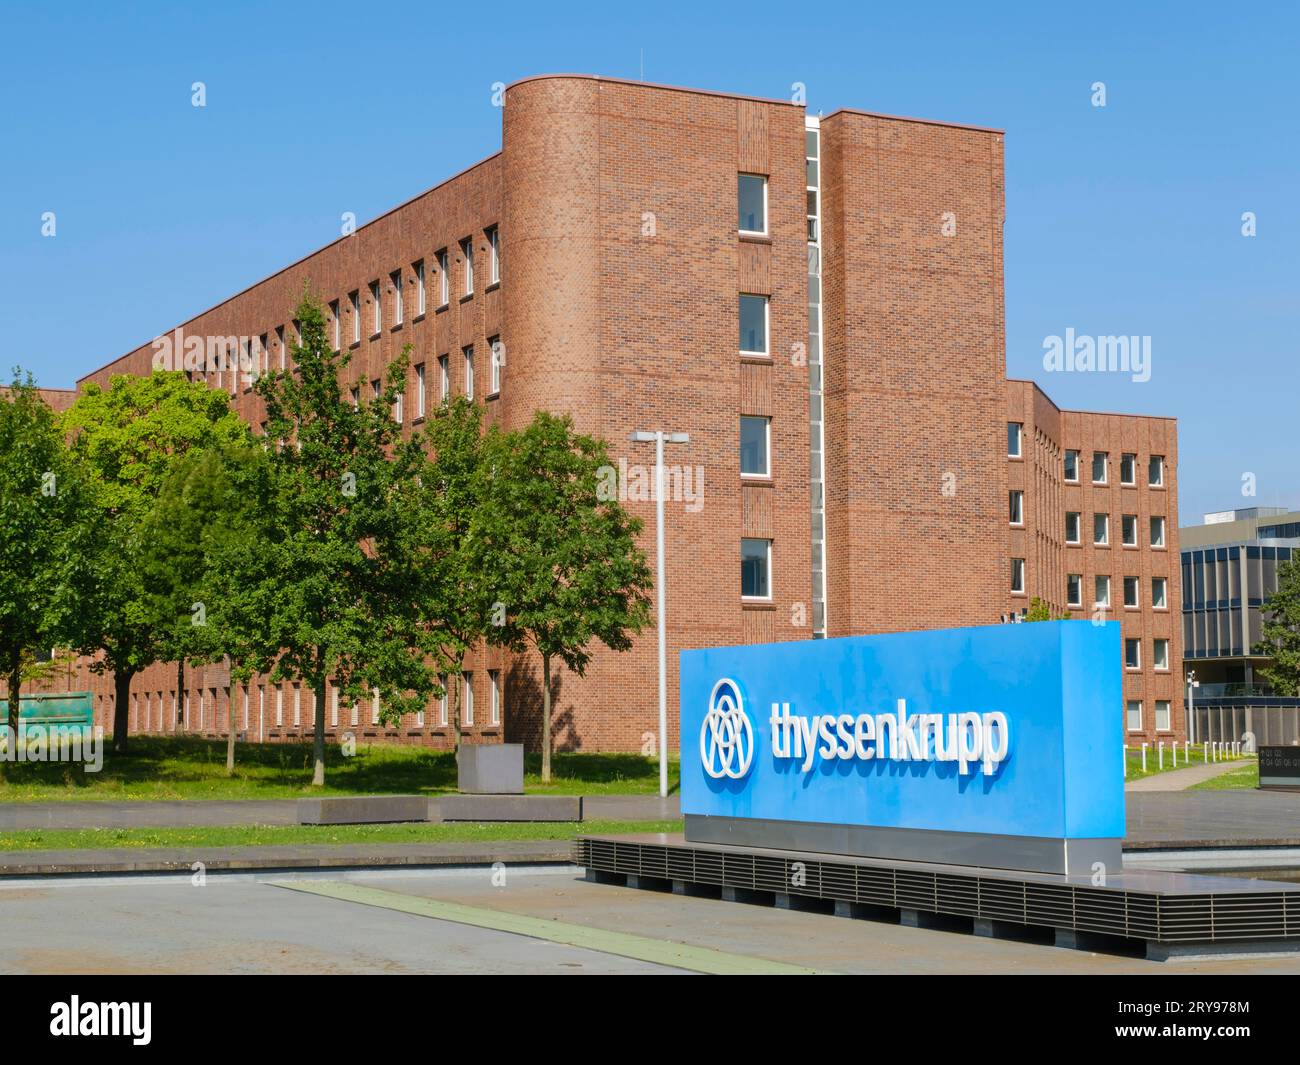 Thyssenkrupp sign and logo, Ruhr tech kampus Essen, Essen, Ruhr area, North Rhine-Westphalia, Germany Stock Photo